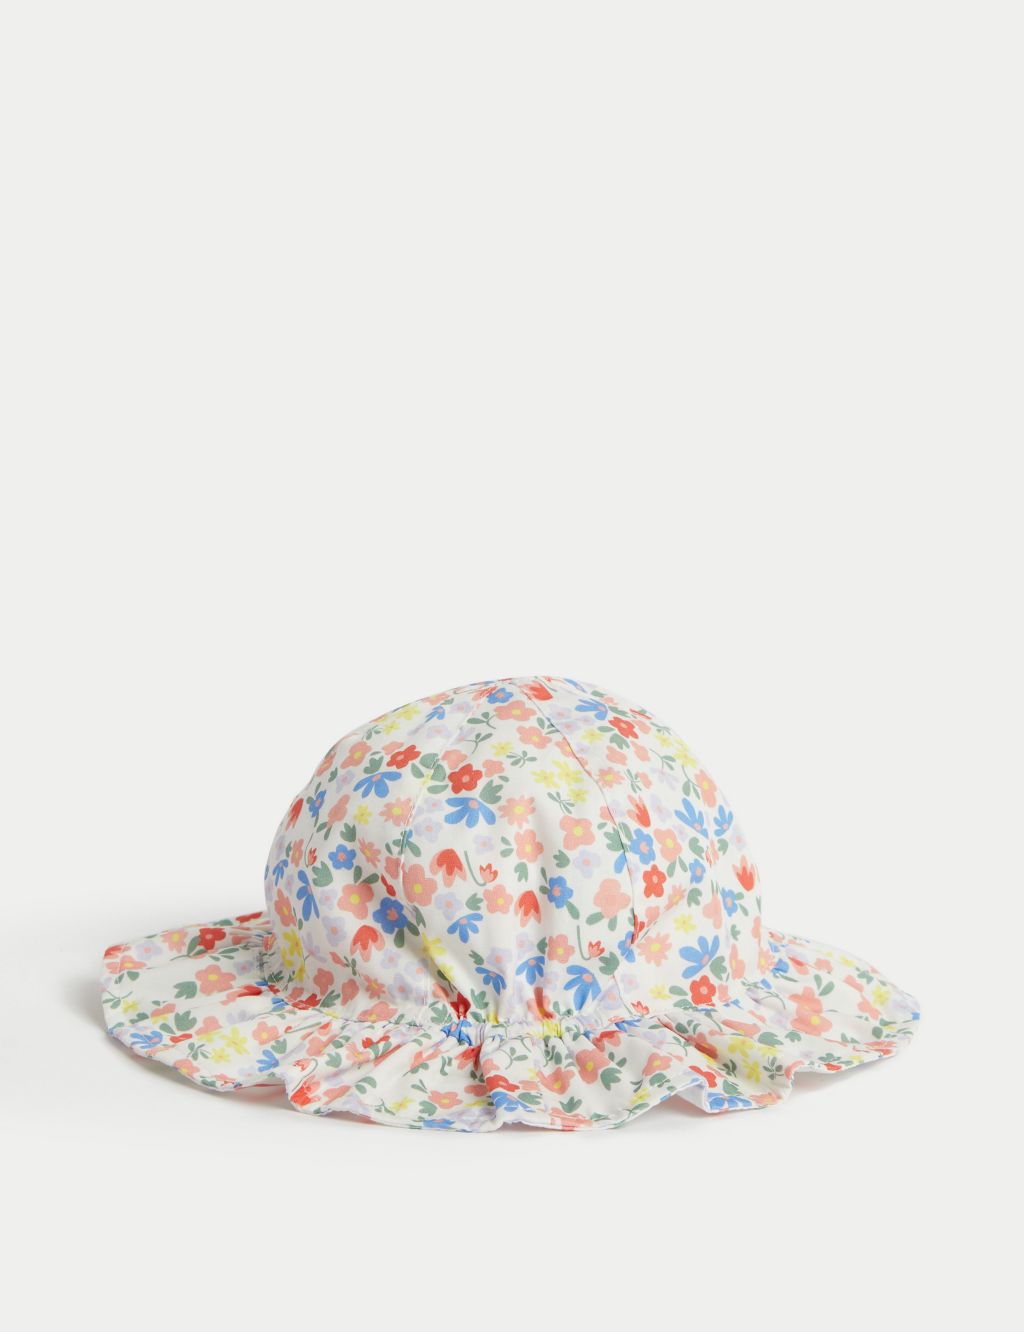 Kids' Pure Cotton Reversible Floral Sun Hat (12 Mths-6 Yrs) image 2